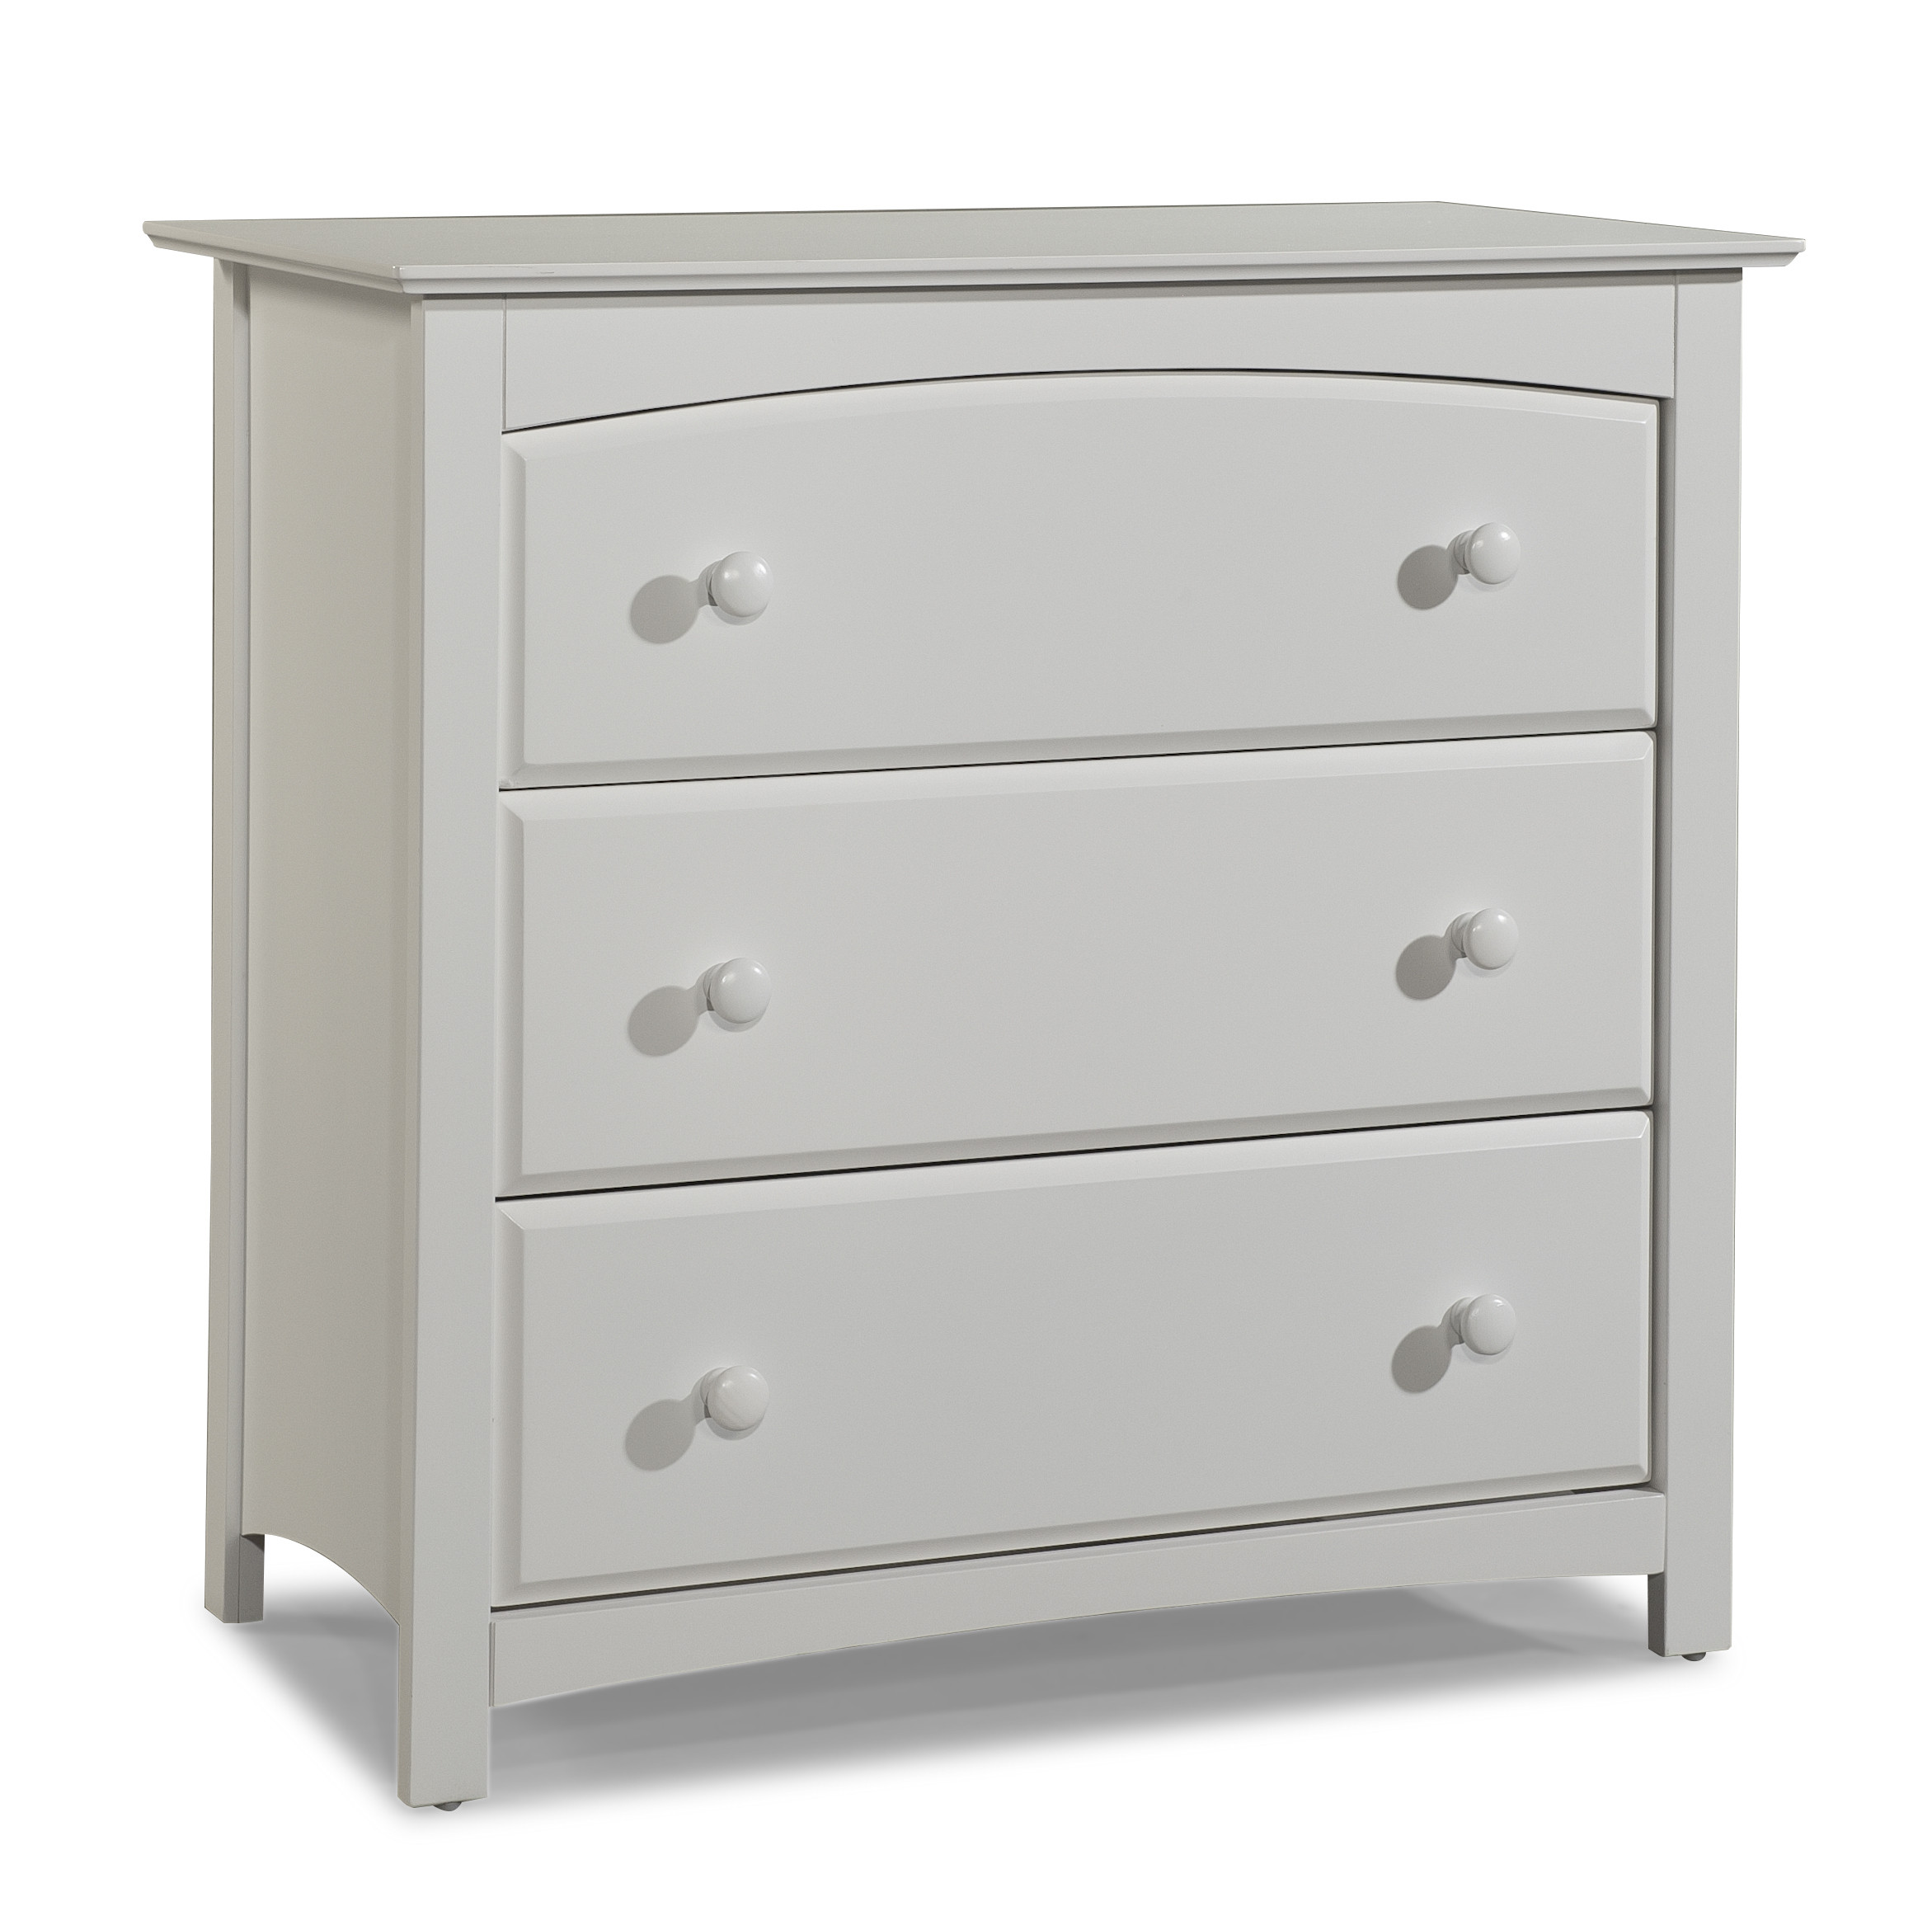 White Dressers For Baby Room
 Storkcraft Kenton 3 Drawer Dresser White Baby Baby